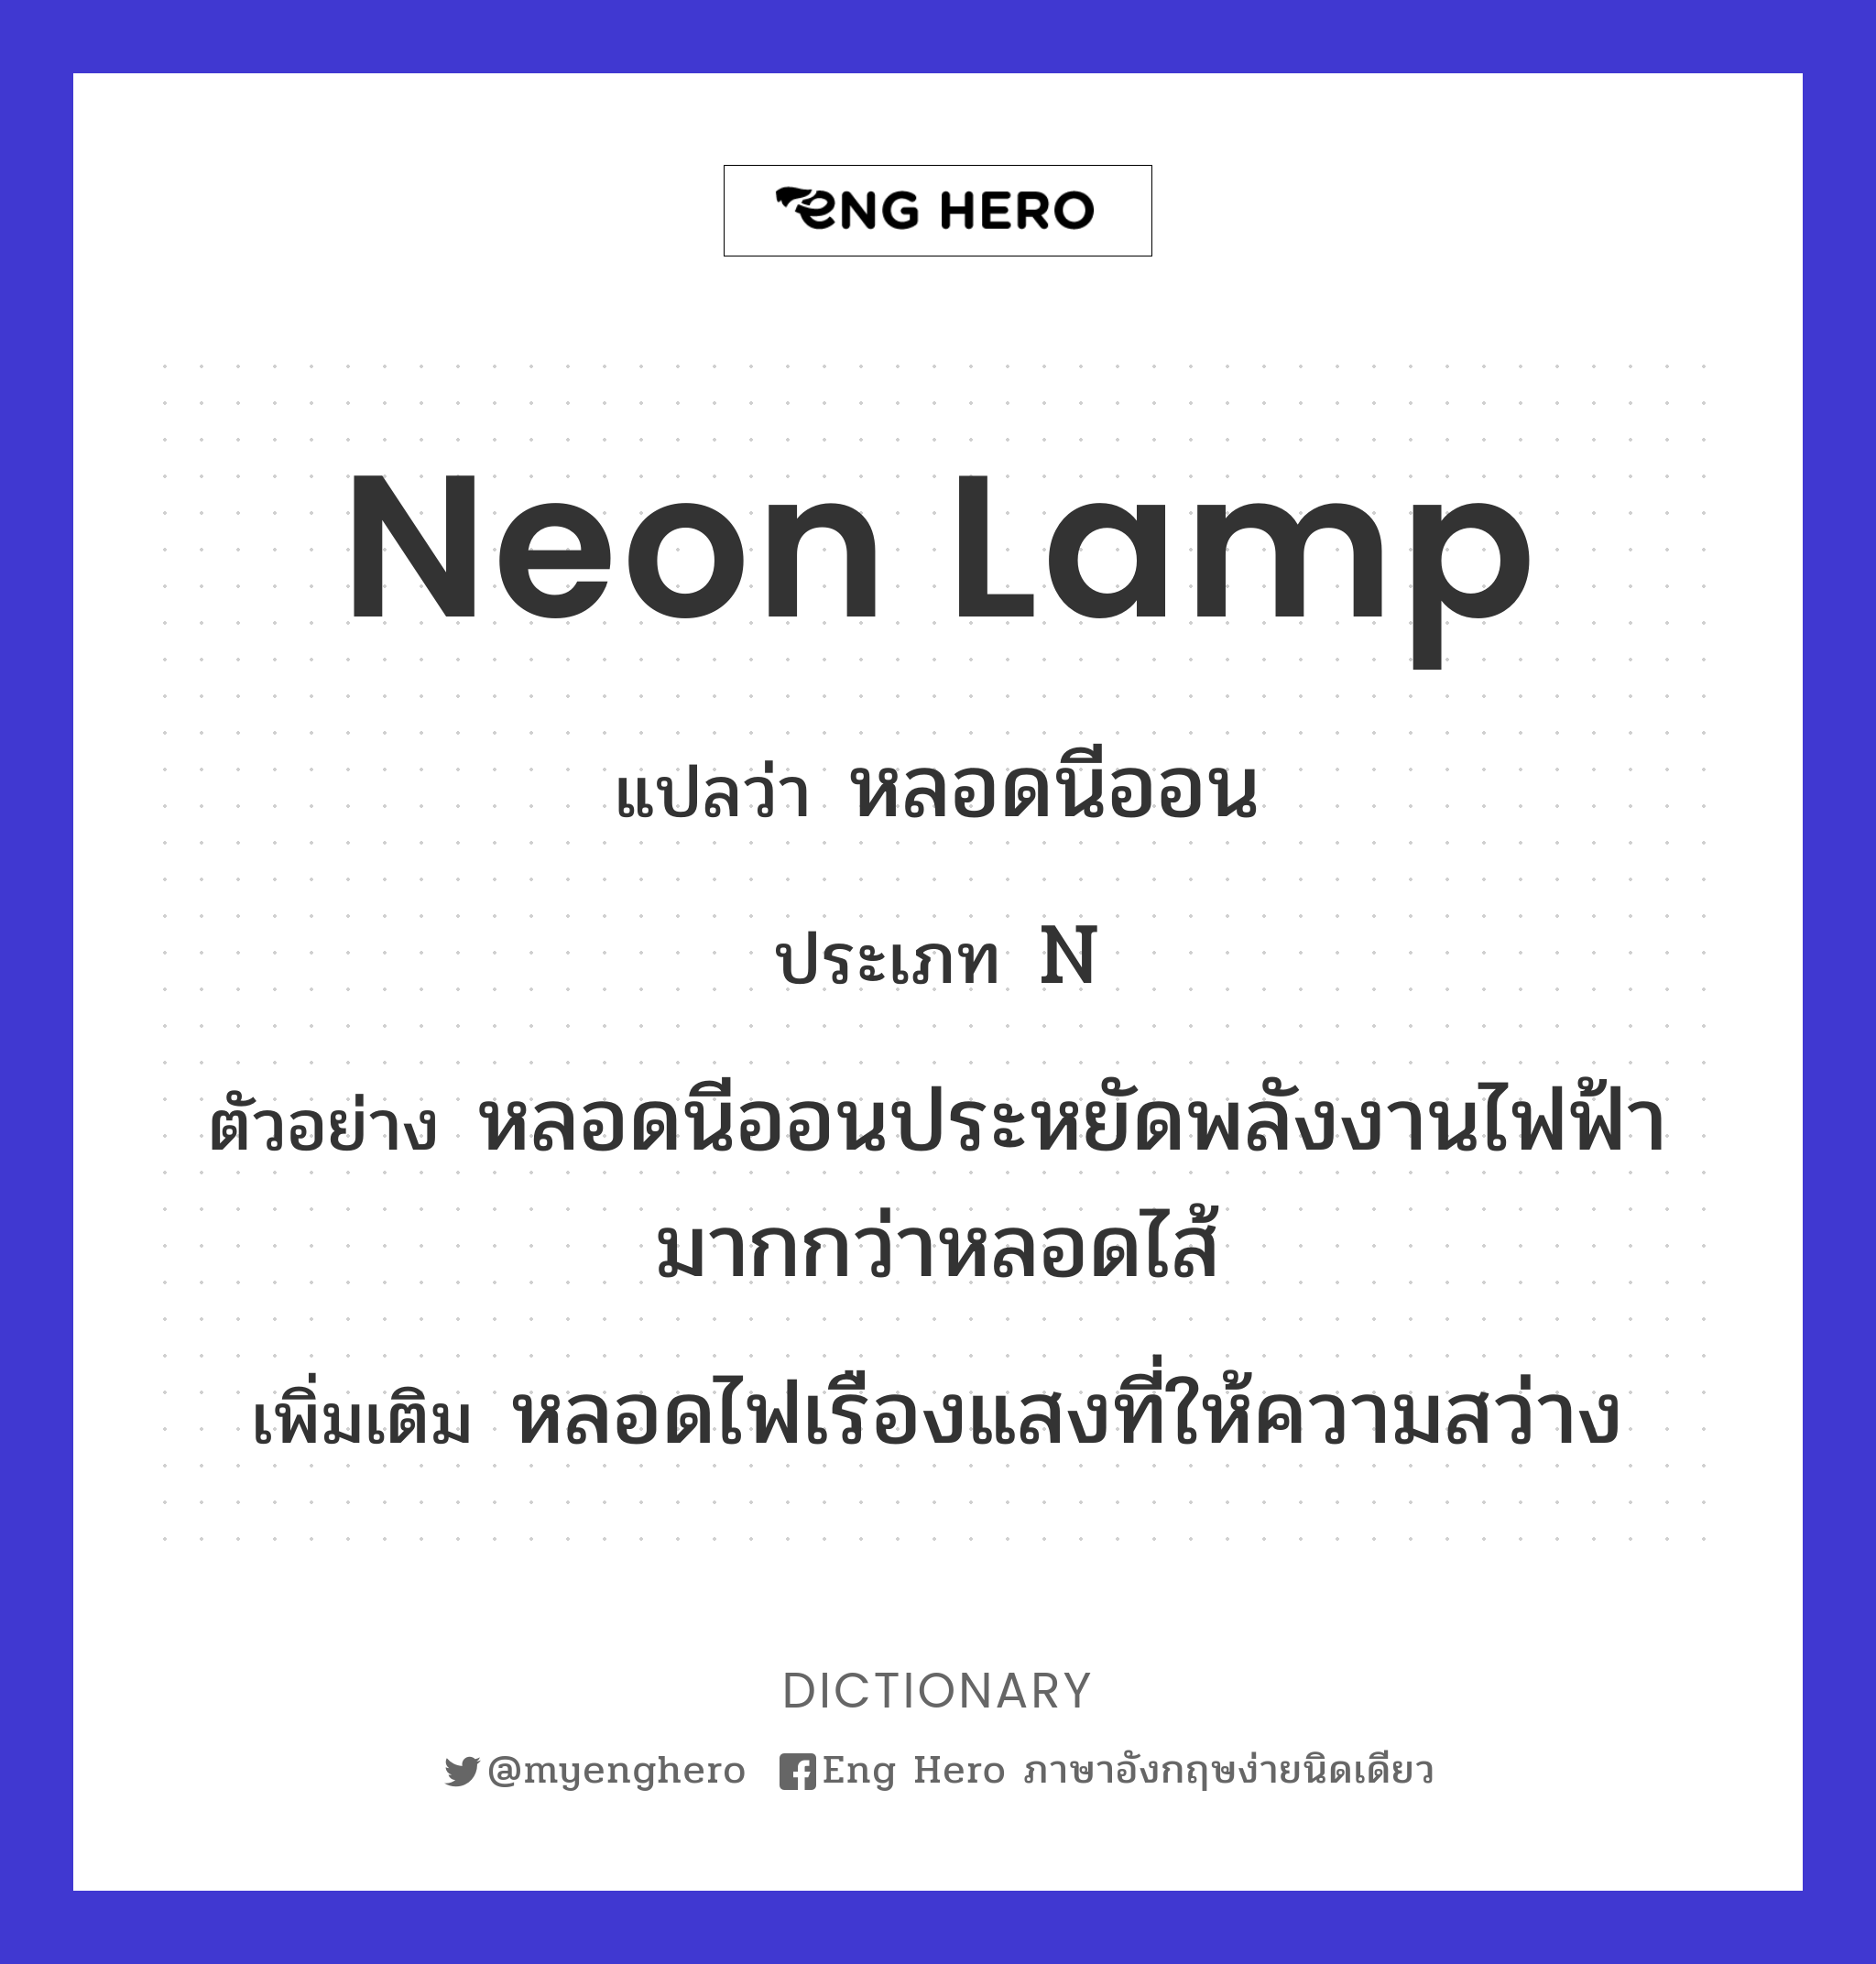 neon lamp